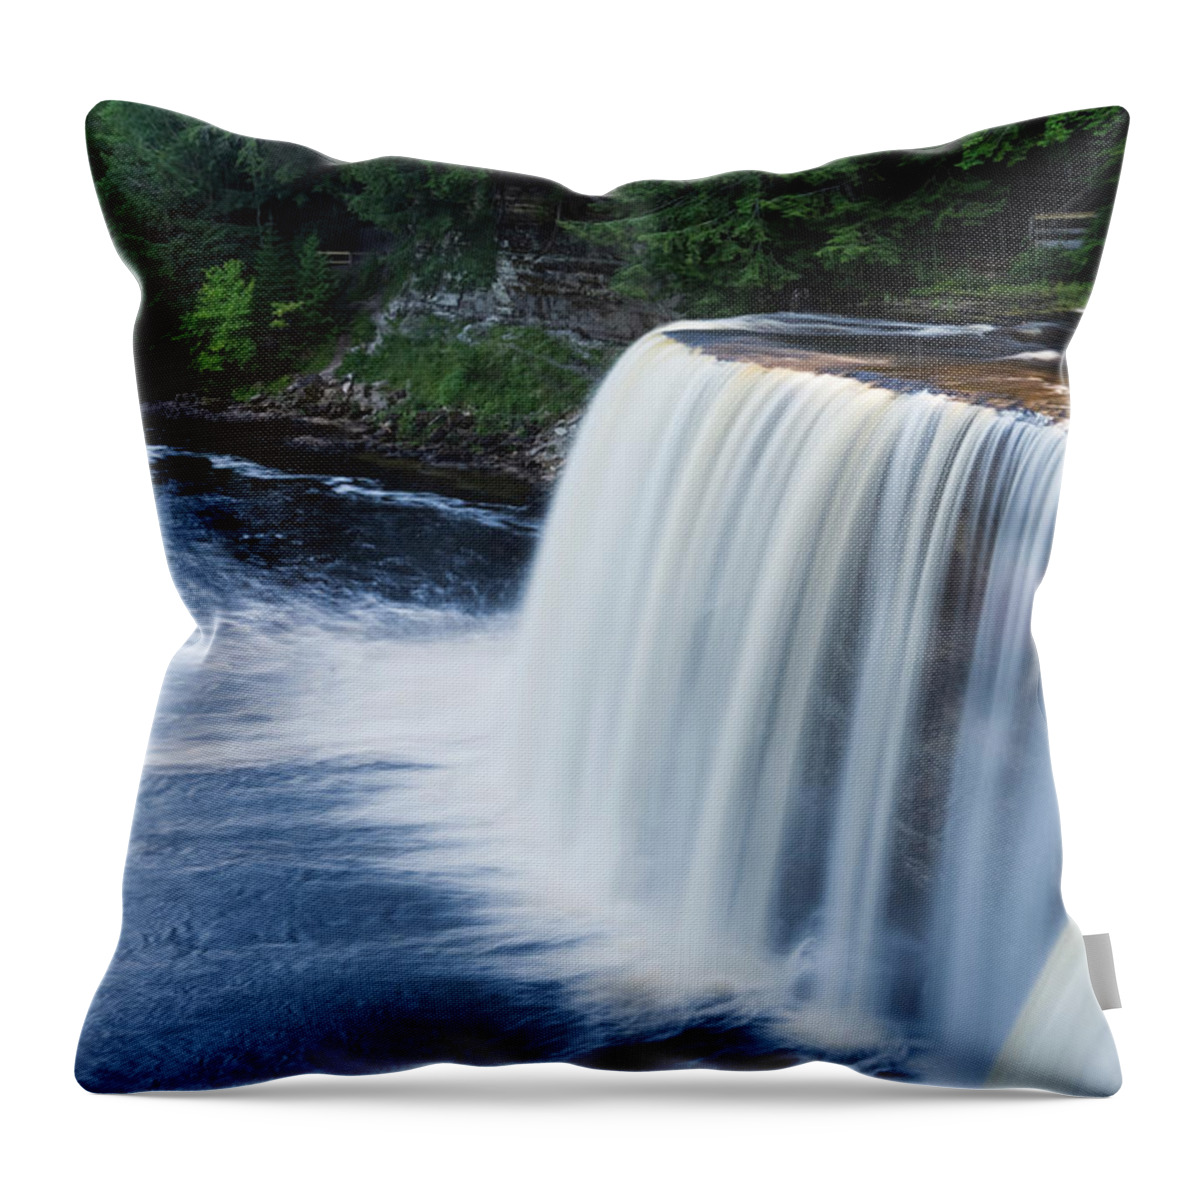 Michigan Throw Pillow featuring the photograph Upper Tahquamenon Falls Michigan by Pickstock